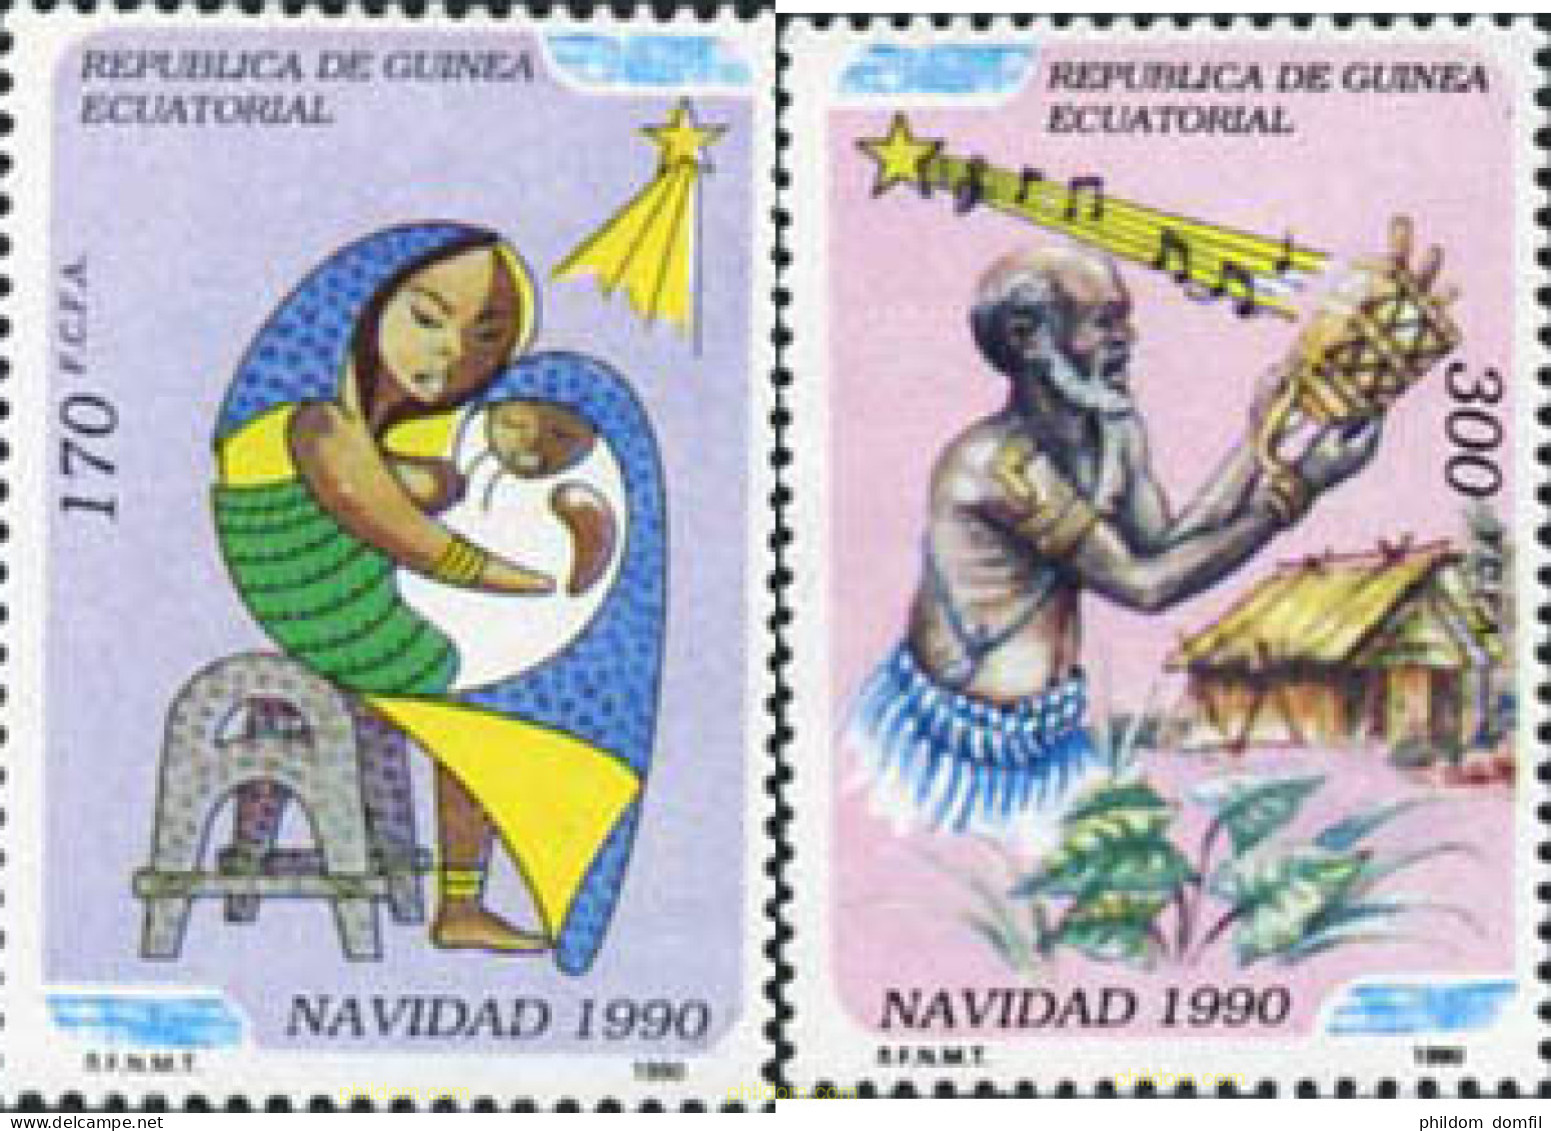 190414 MNH GUINEA ECUATORIAL 1990 NAVIDAD - Guinea Ecuatorial